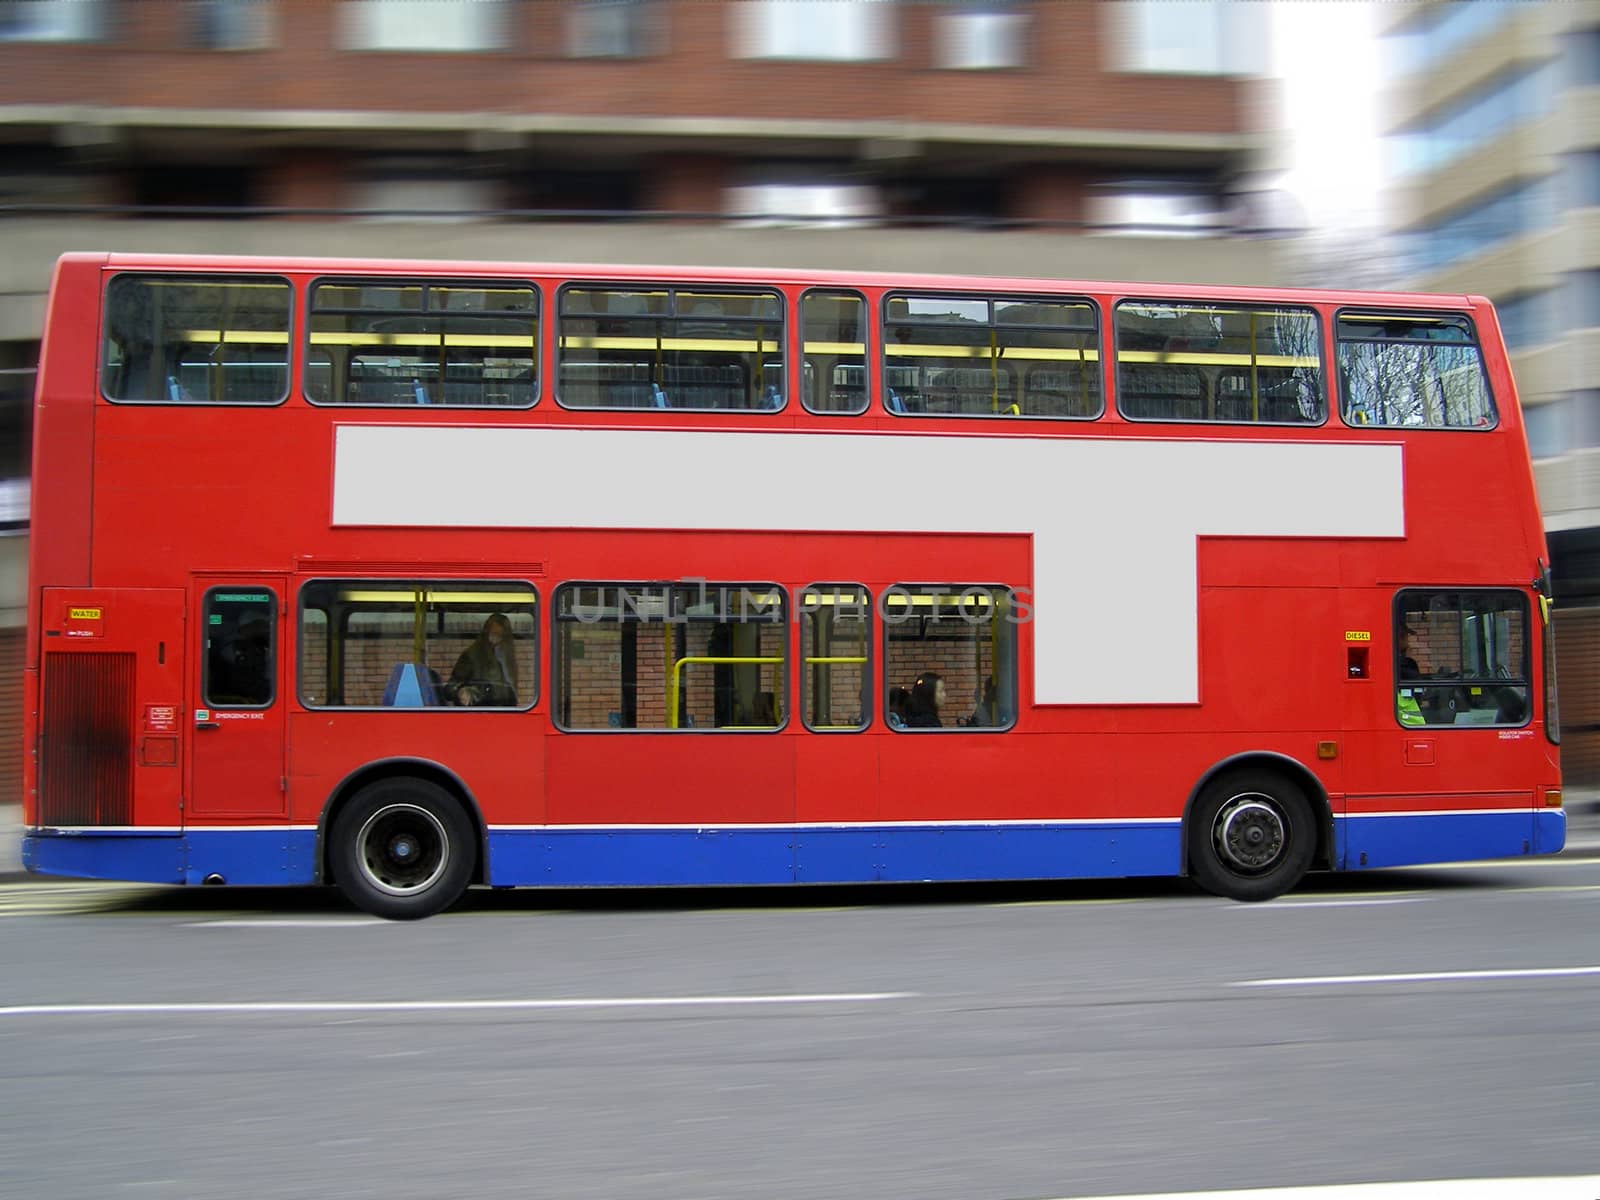 Double decker London bus by claudiodivizia